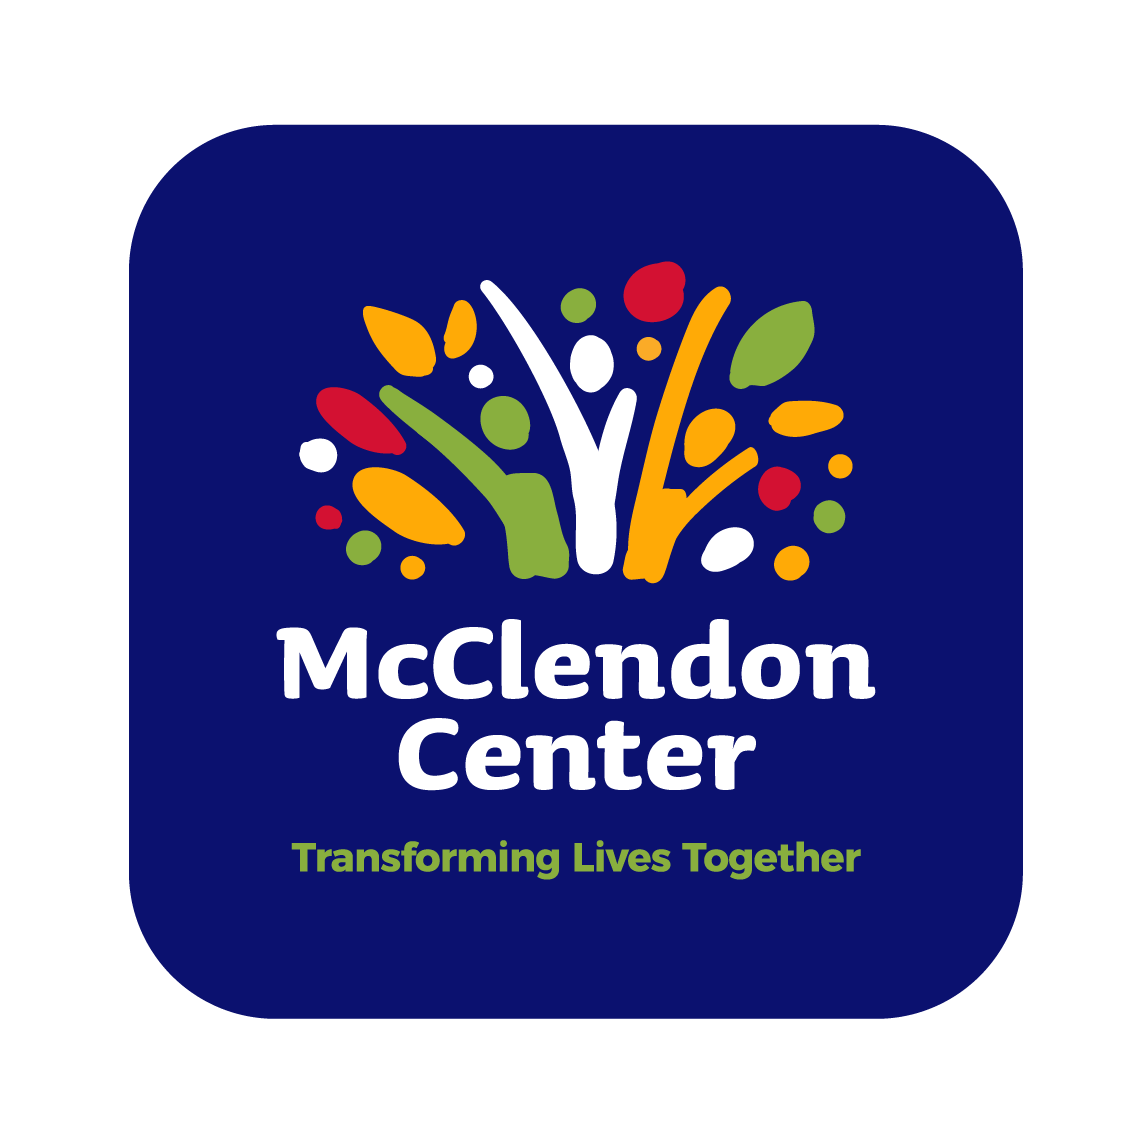 The McClendon Center of Washington, DC